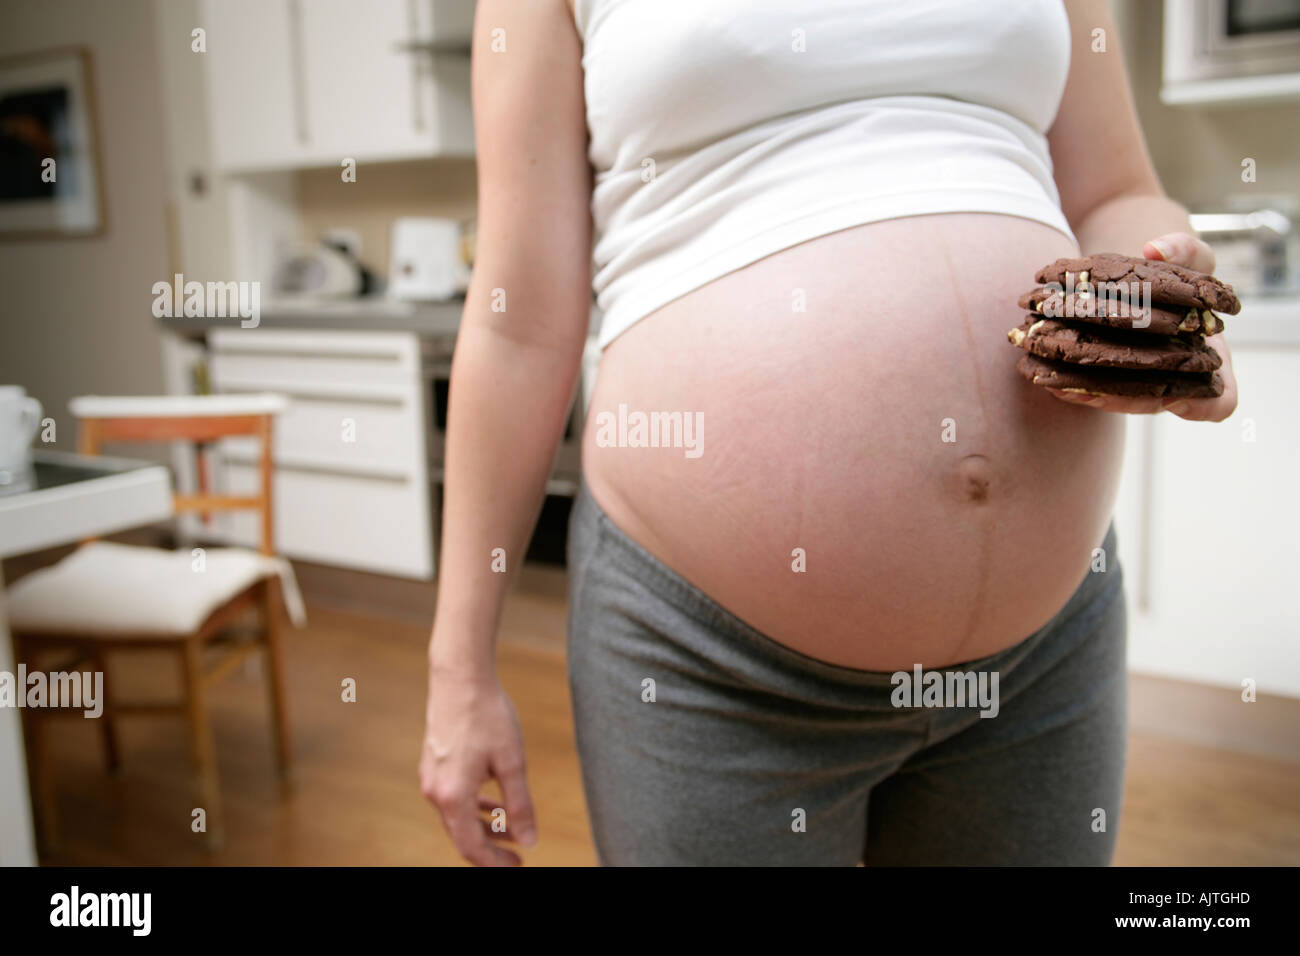 Pregnant woman raiding the cookie jar Stock Photo